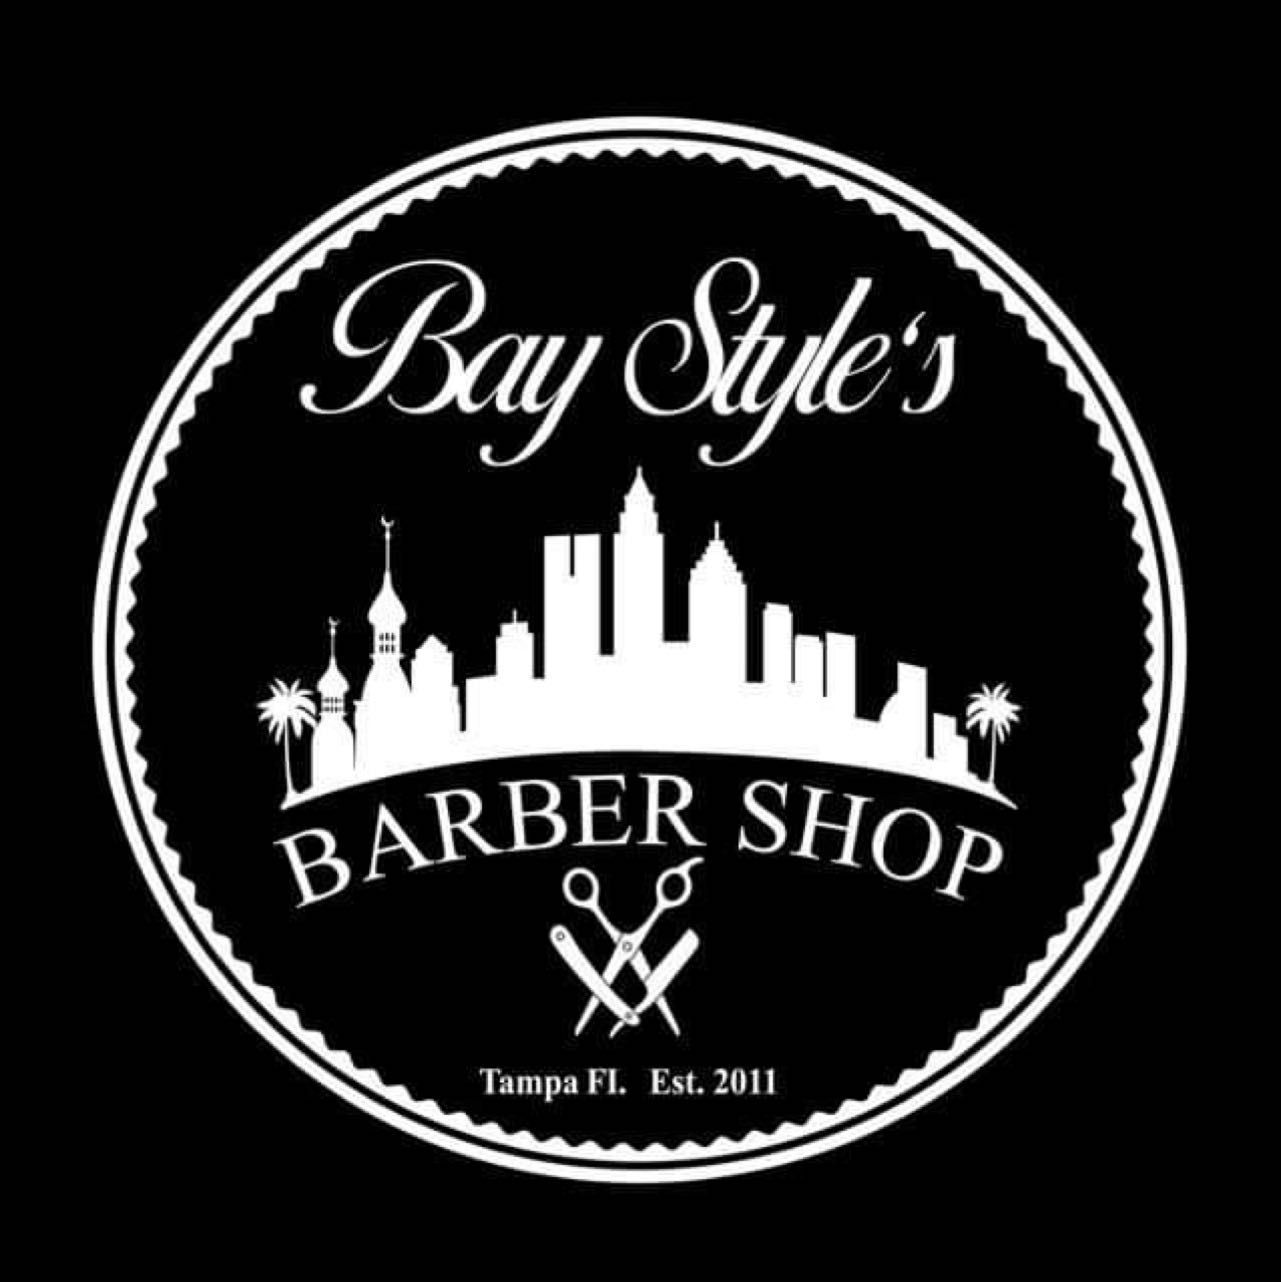 Jose & Bay styles Barbershop, 7515 N Armenia Ave, Suite A, Tampa, 33604